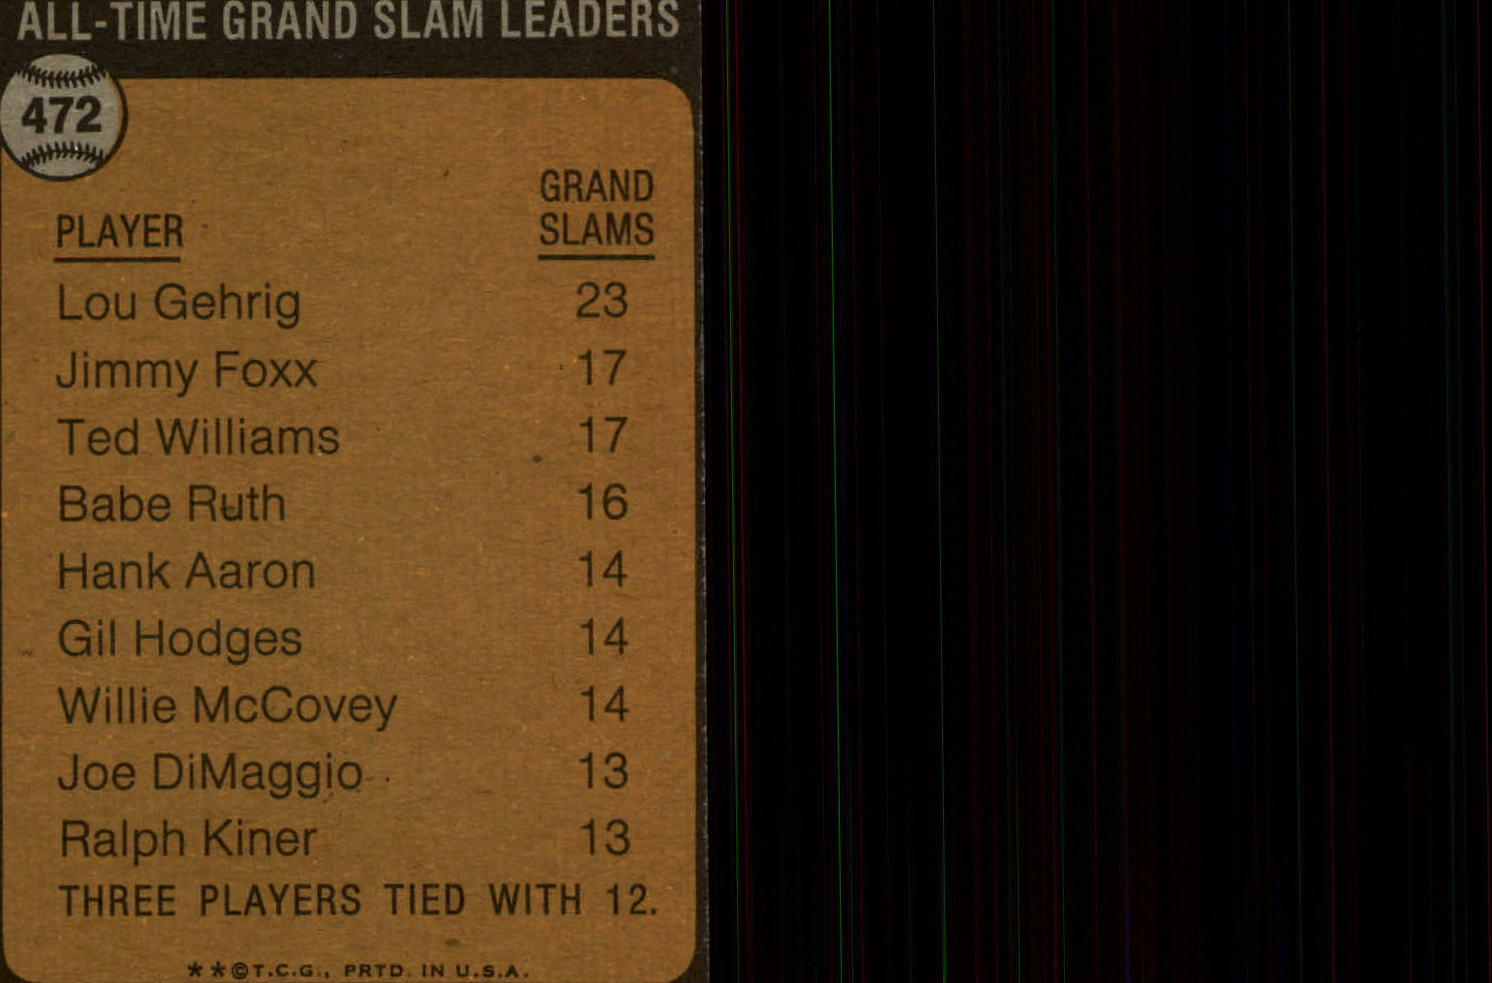 1973 Topps #472 Lou Gehrig/All-Time Grand Slam Leader back image